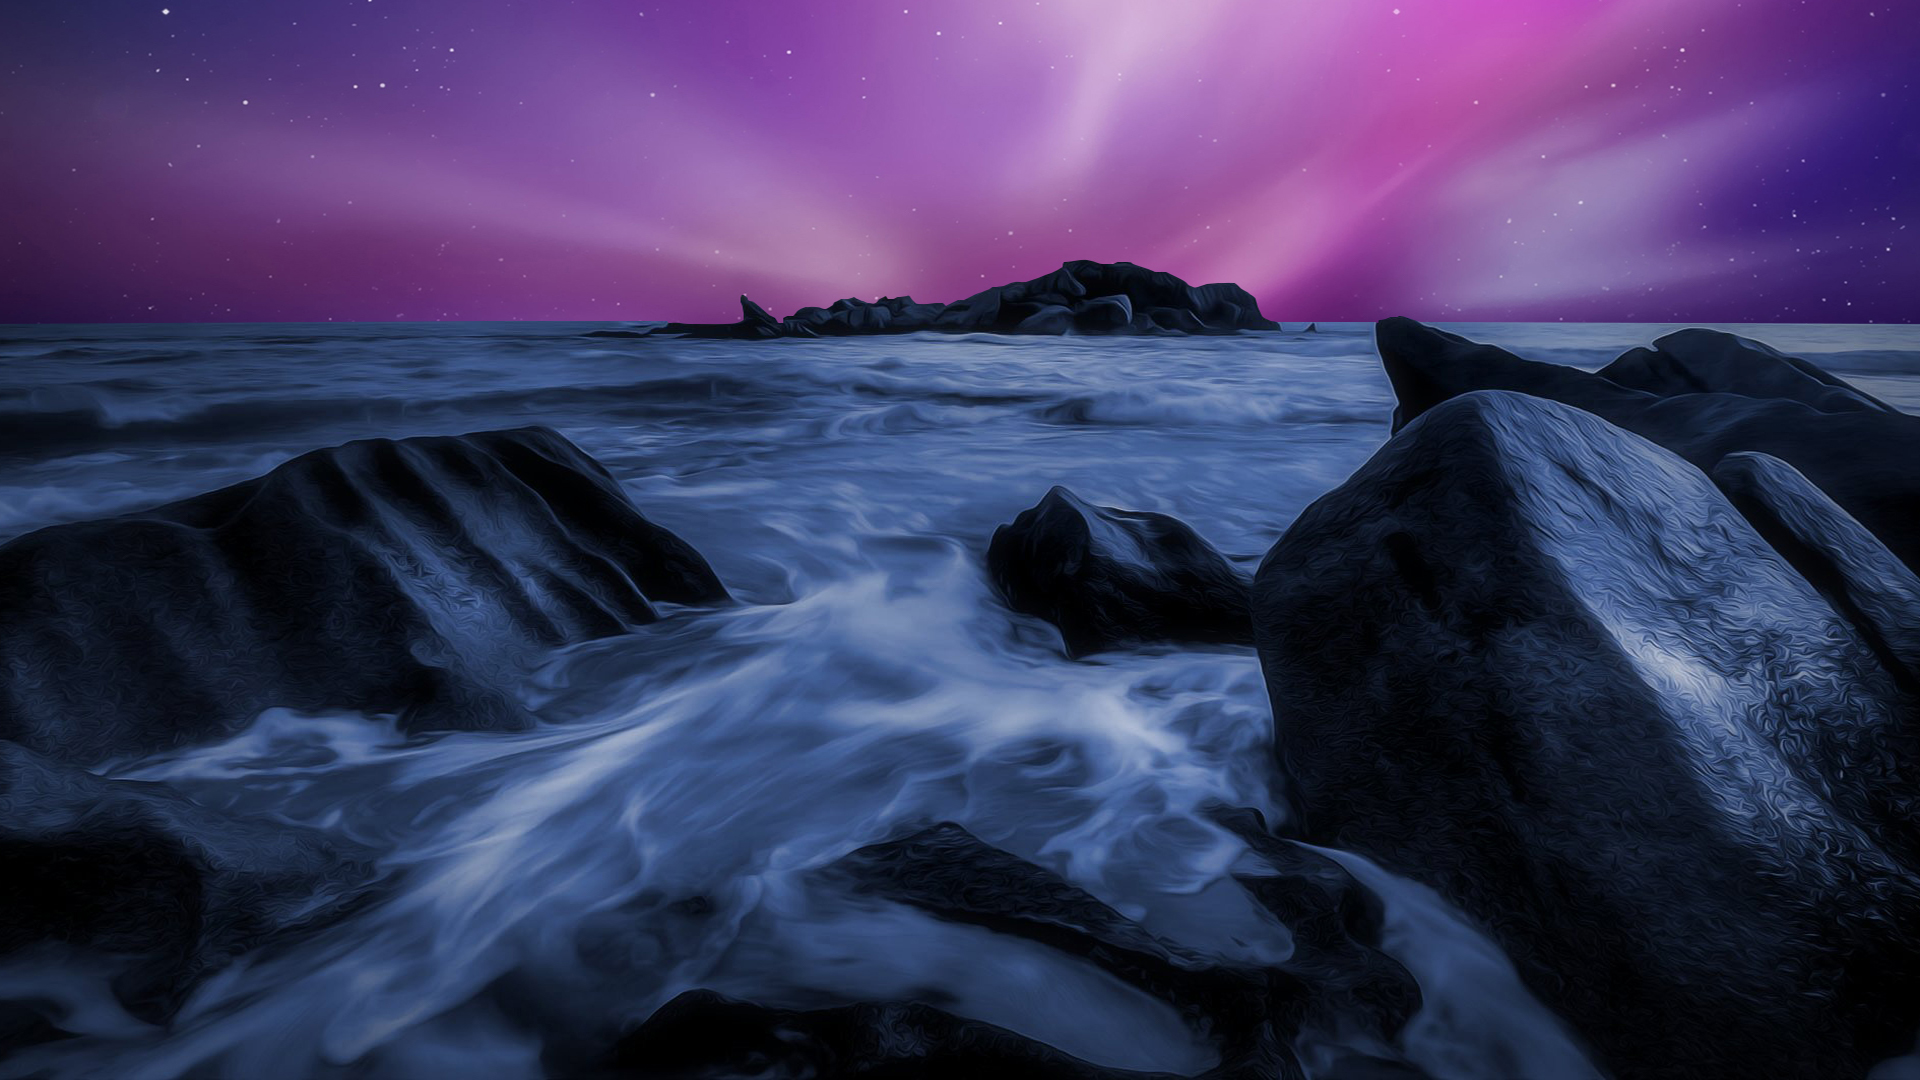 Beautiful purple sunset on the sea